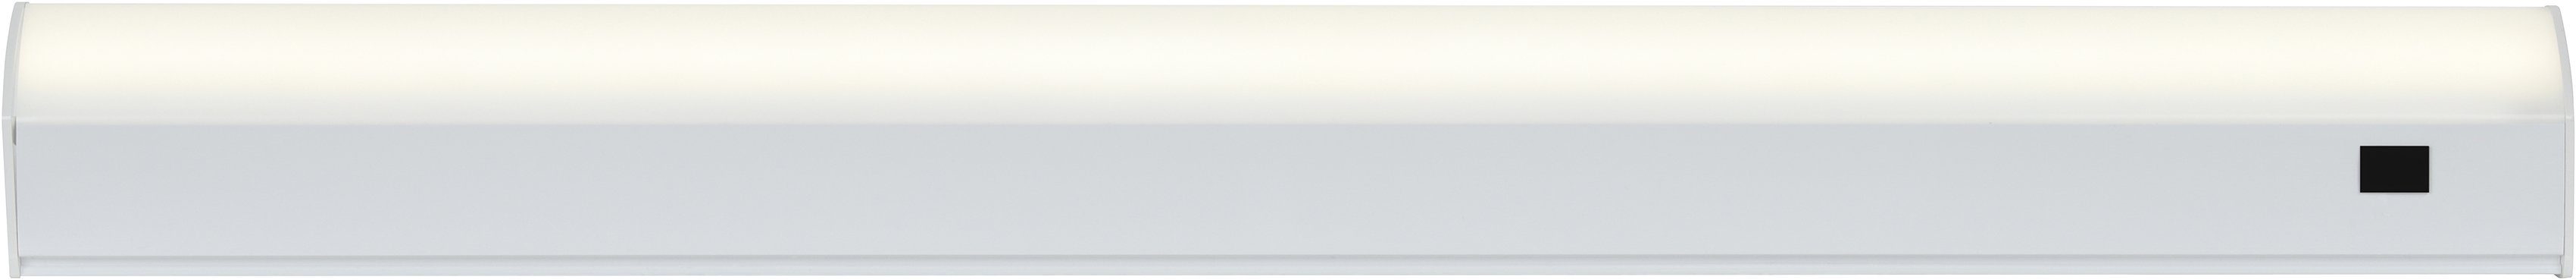 Nordlux Unterschrankleuchte Bity, LED 530 6W fest inkl. inkl. Warmweiß, integriert, LED, Bewegungssensor Lumen